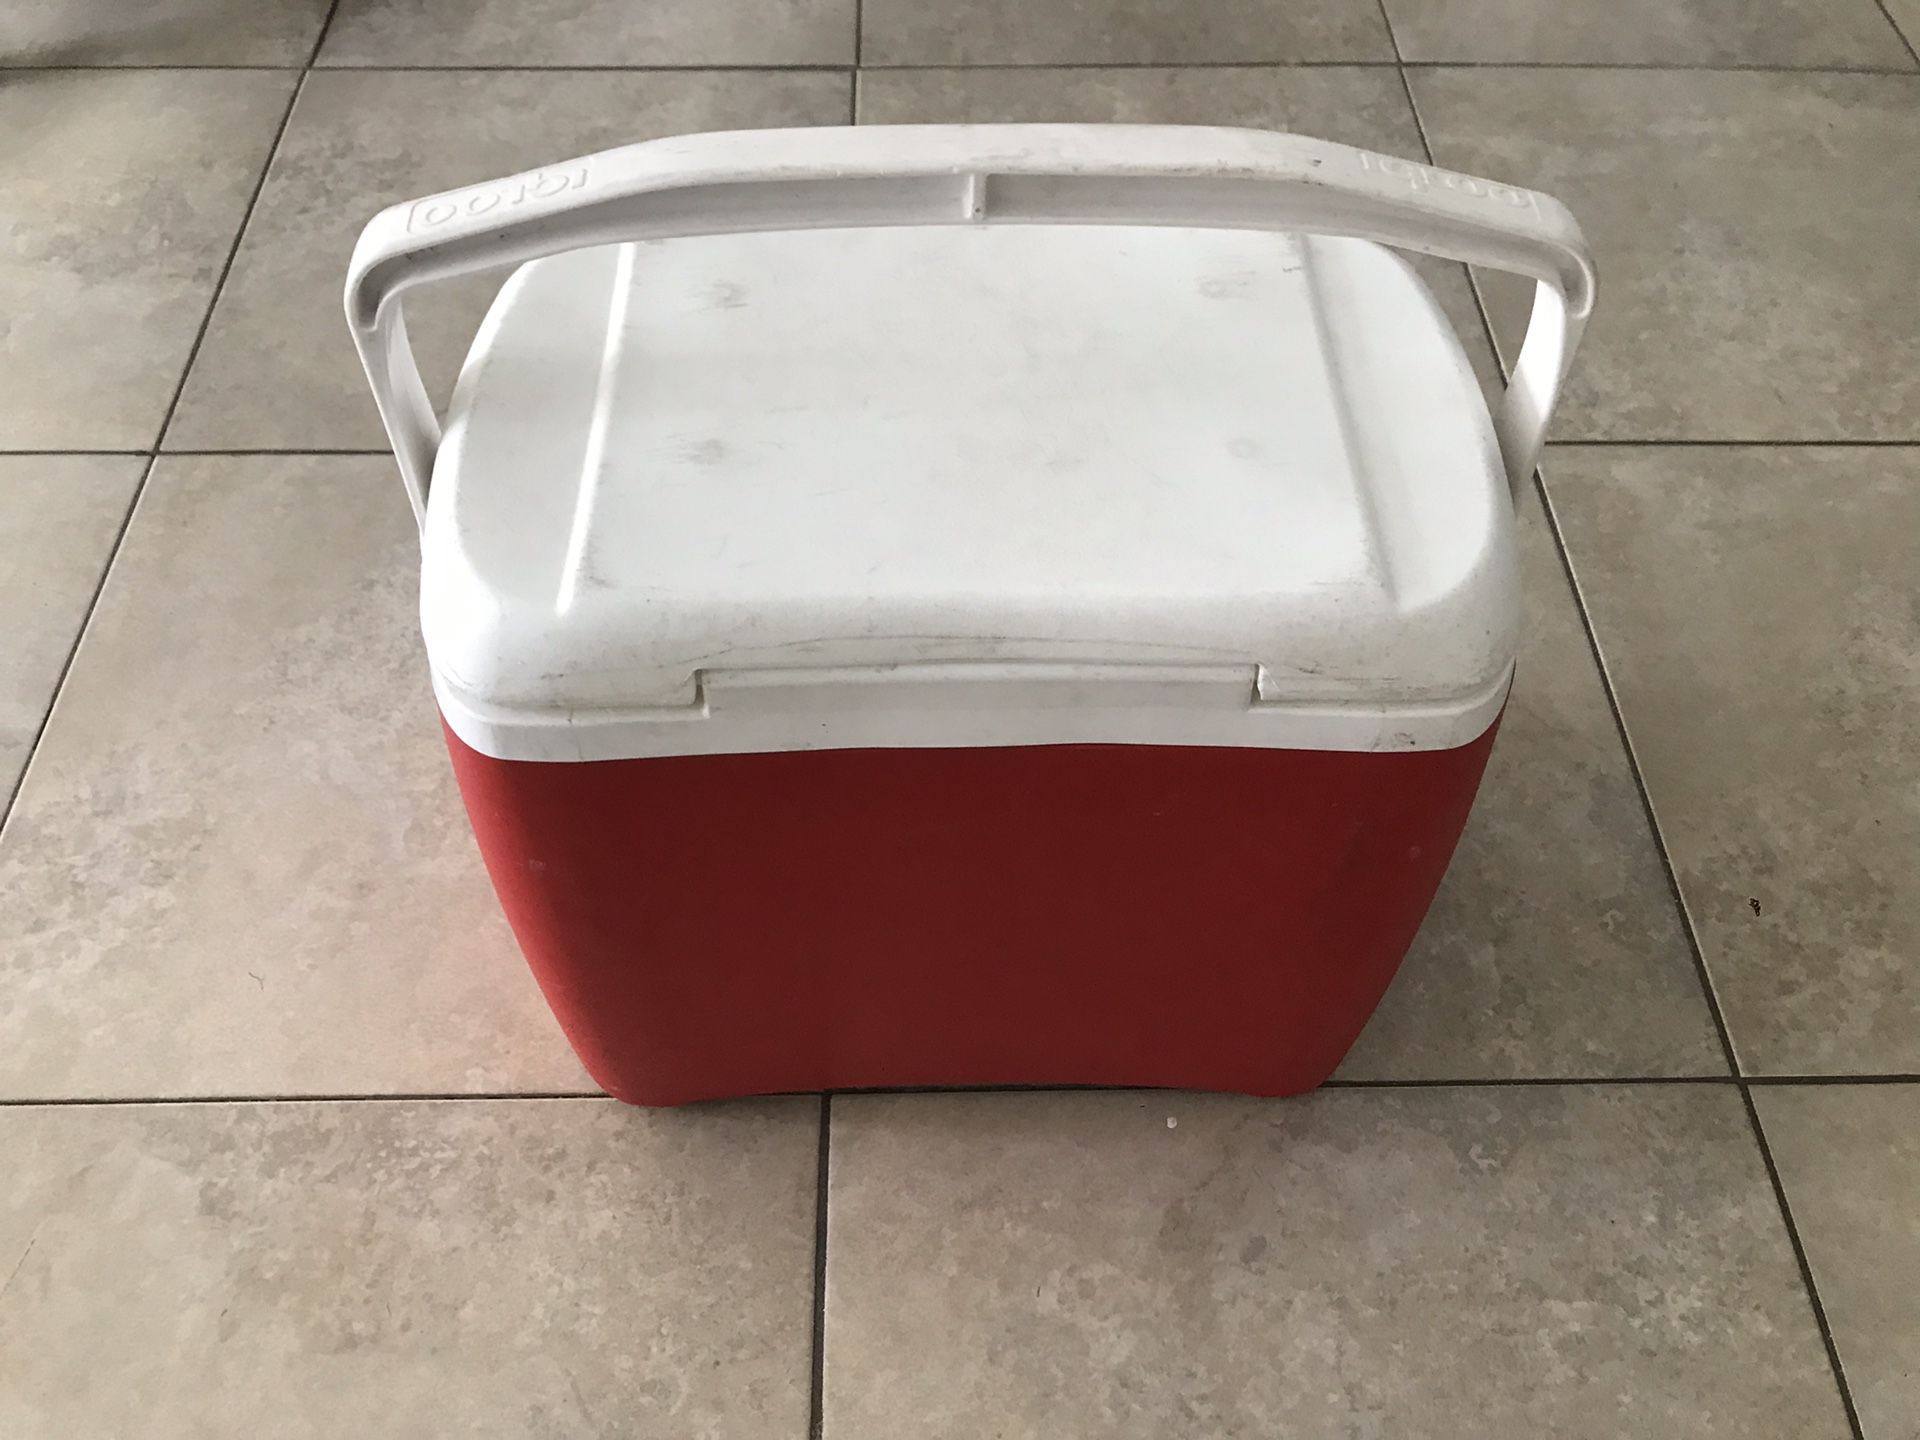 Red Igloo cooler